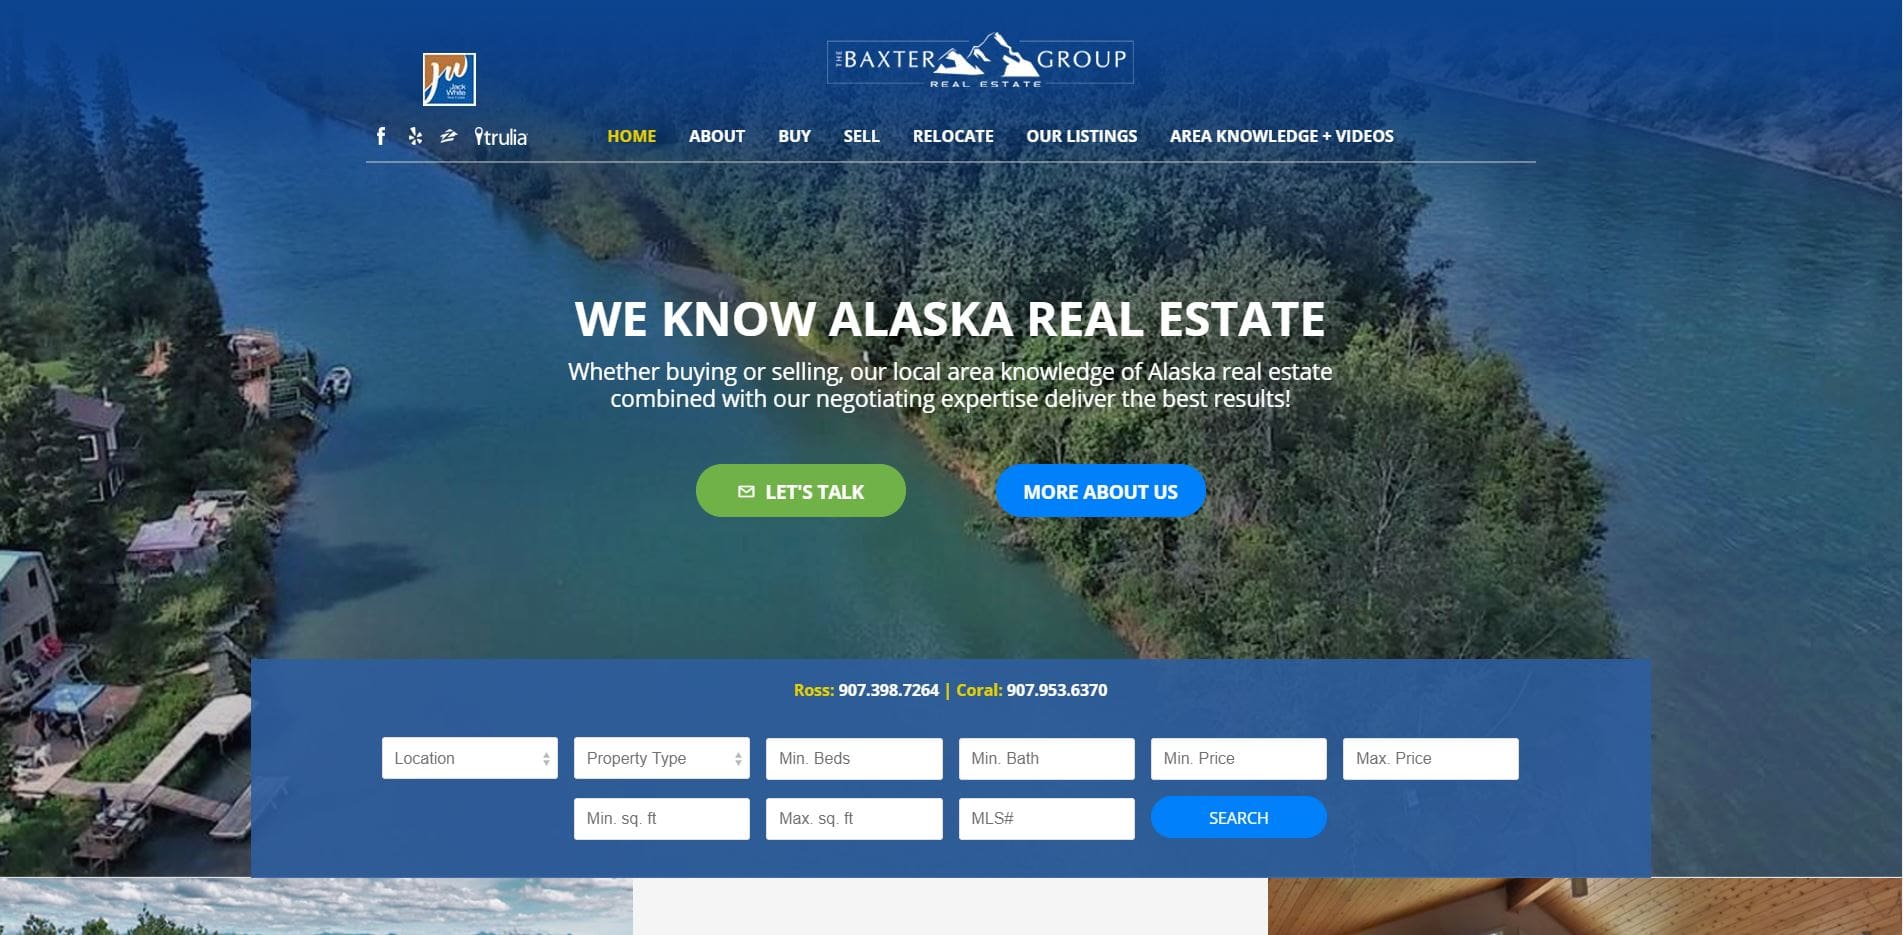 The Baxter Group Website Design